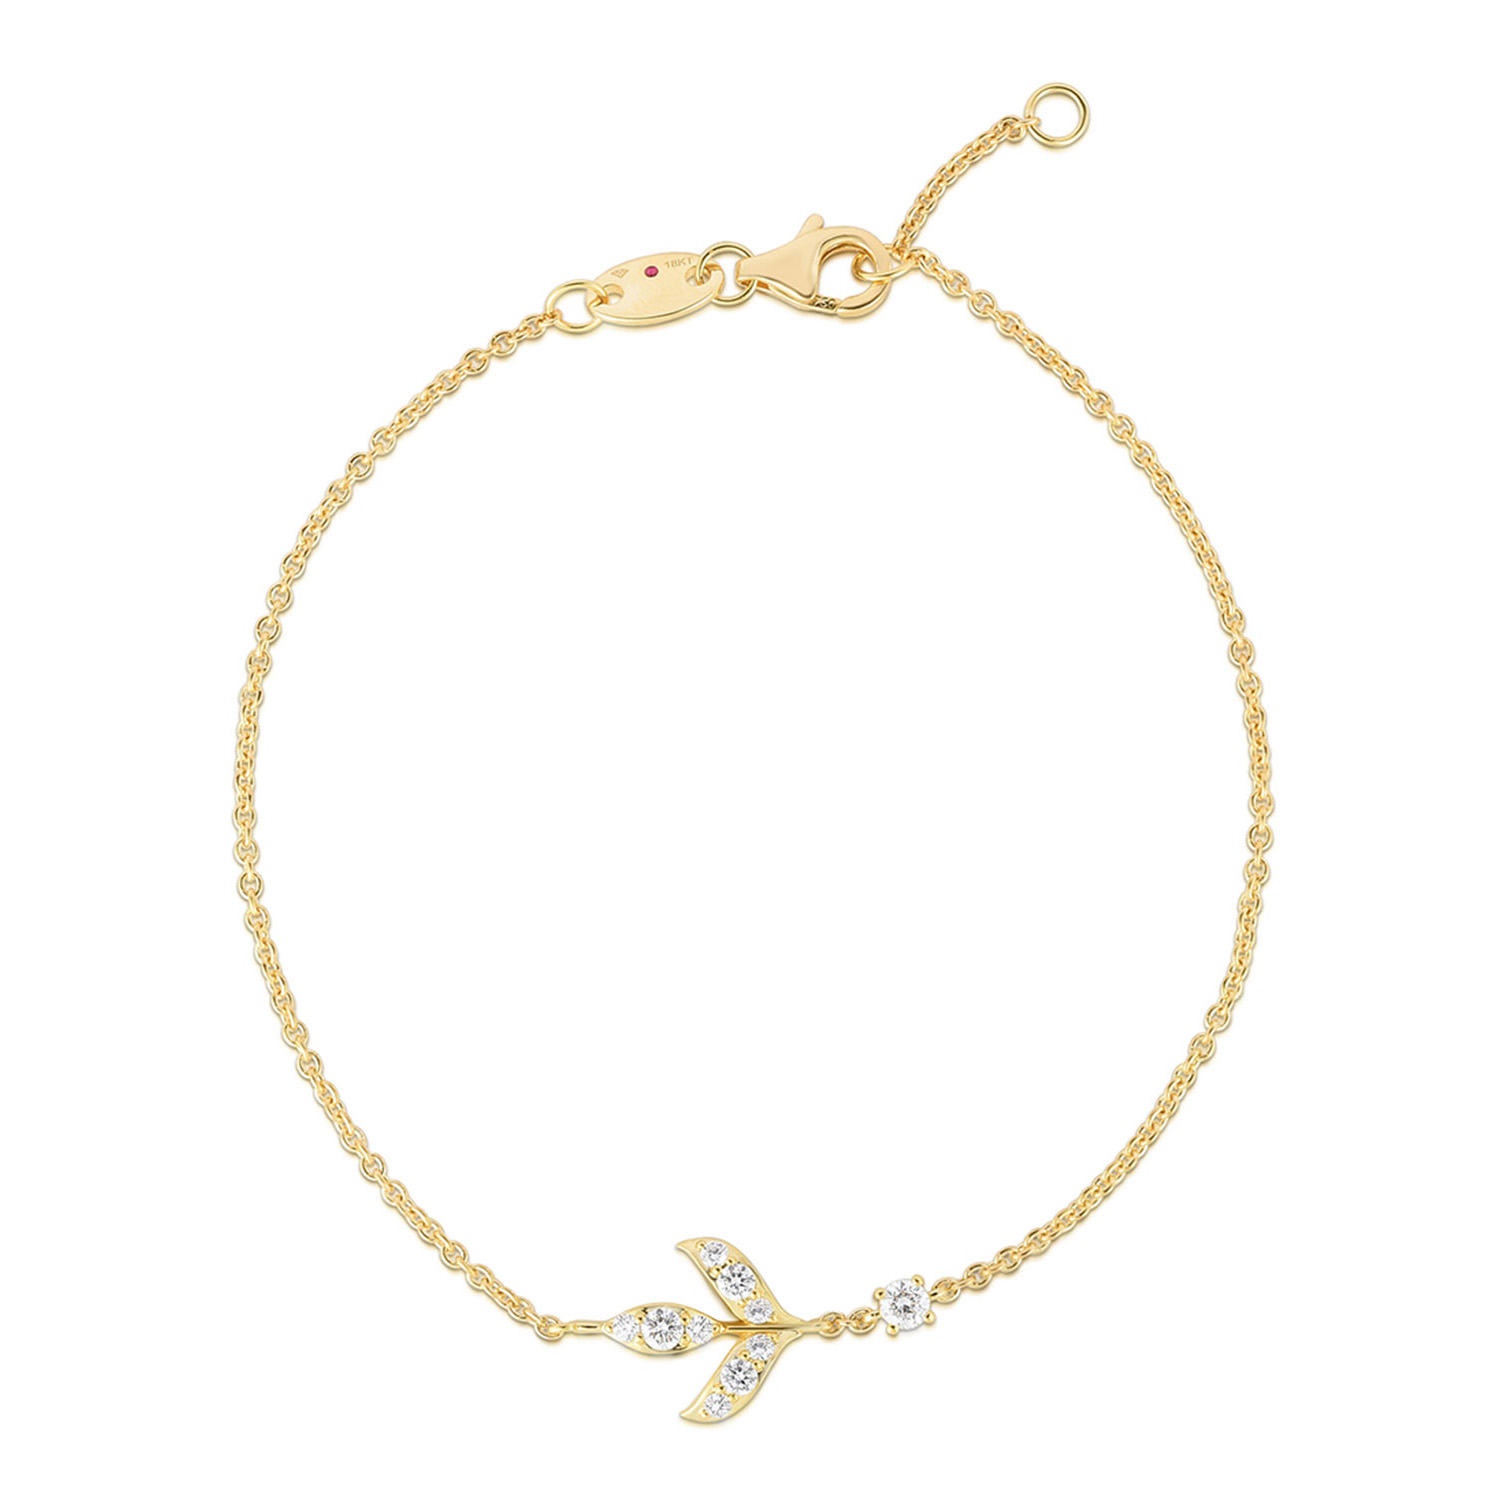 Mórdhíol Jewelry OEM/ODM Saincheaptha 18k Gold plated Cruithneacht Bracelet soláthróir jewelry airgid sterling